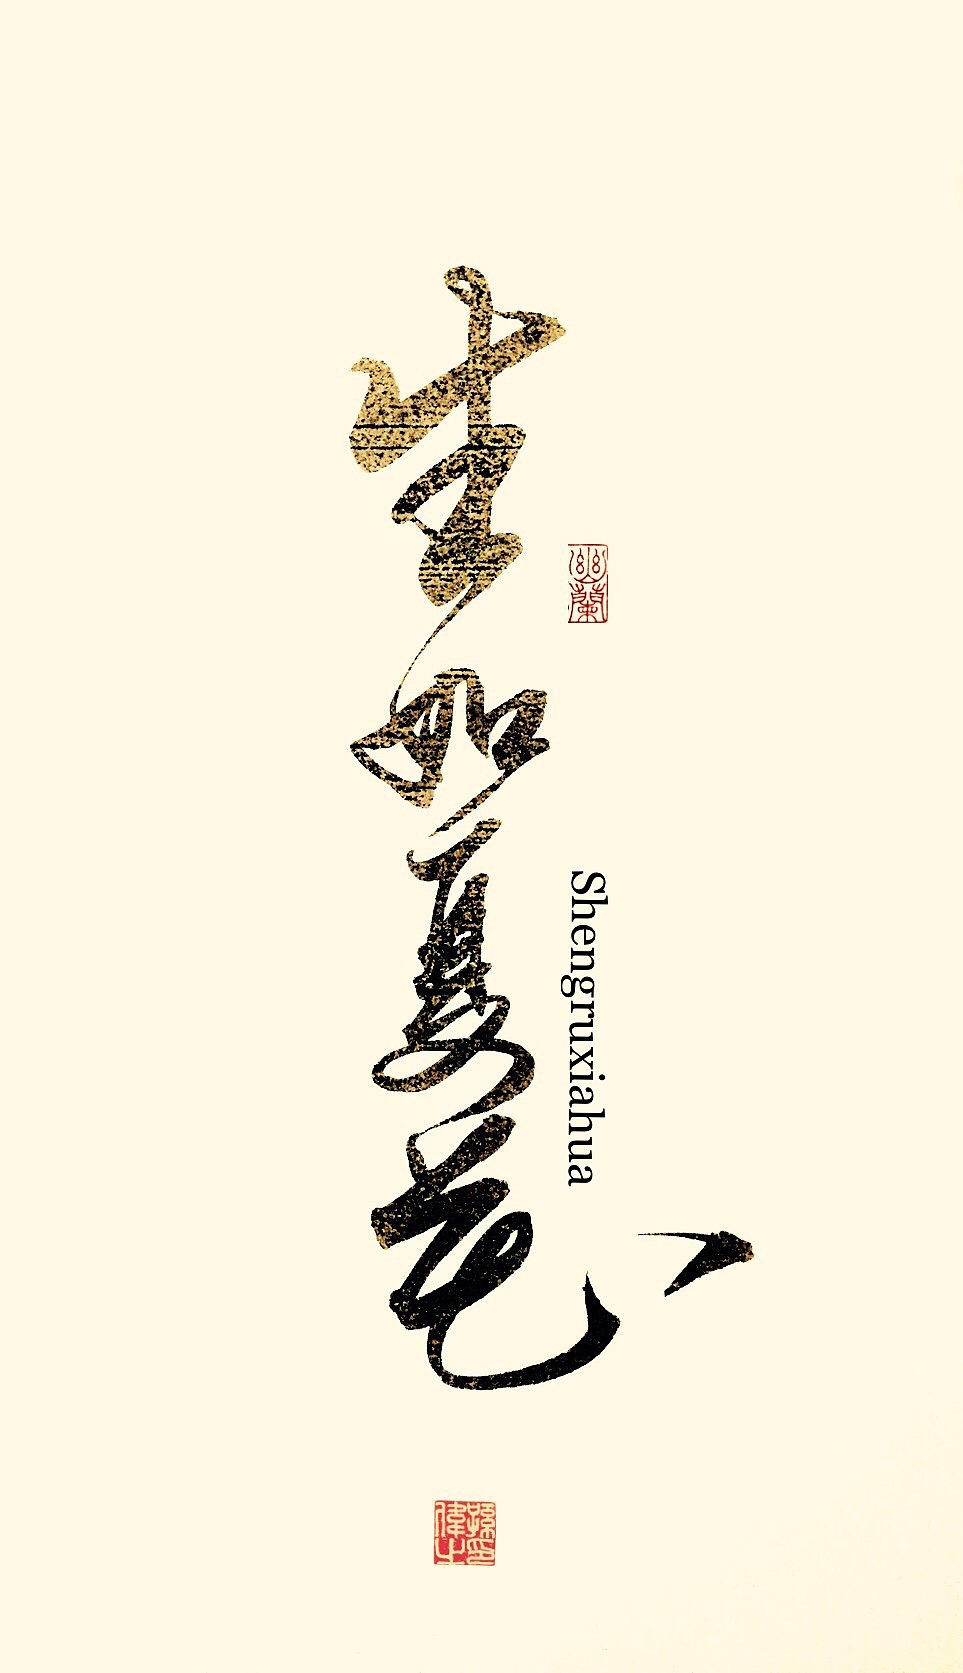 Chinese Creative Font Design-Ling Yunzhi-Handwritten Calligraphy Font